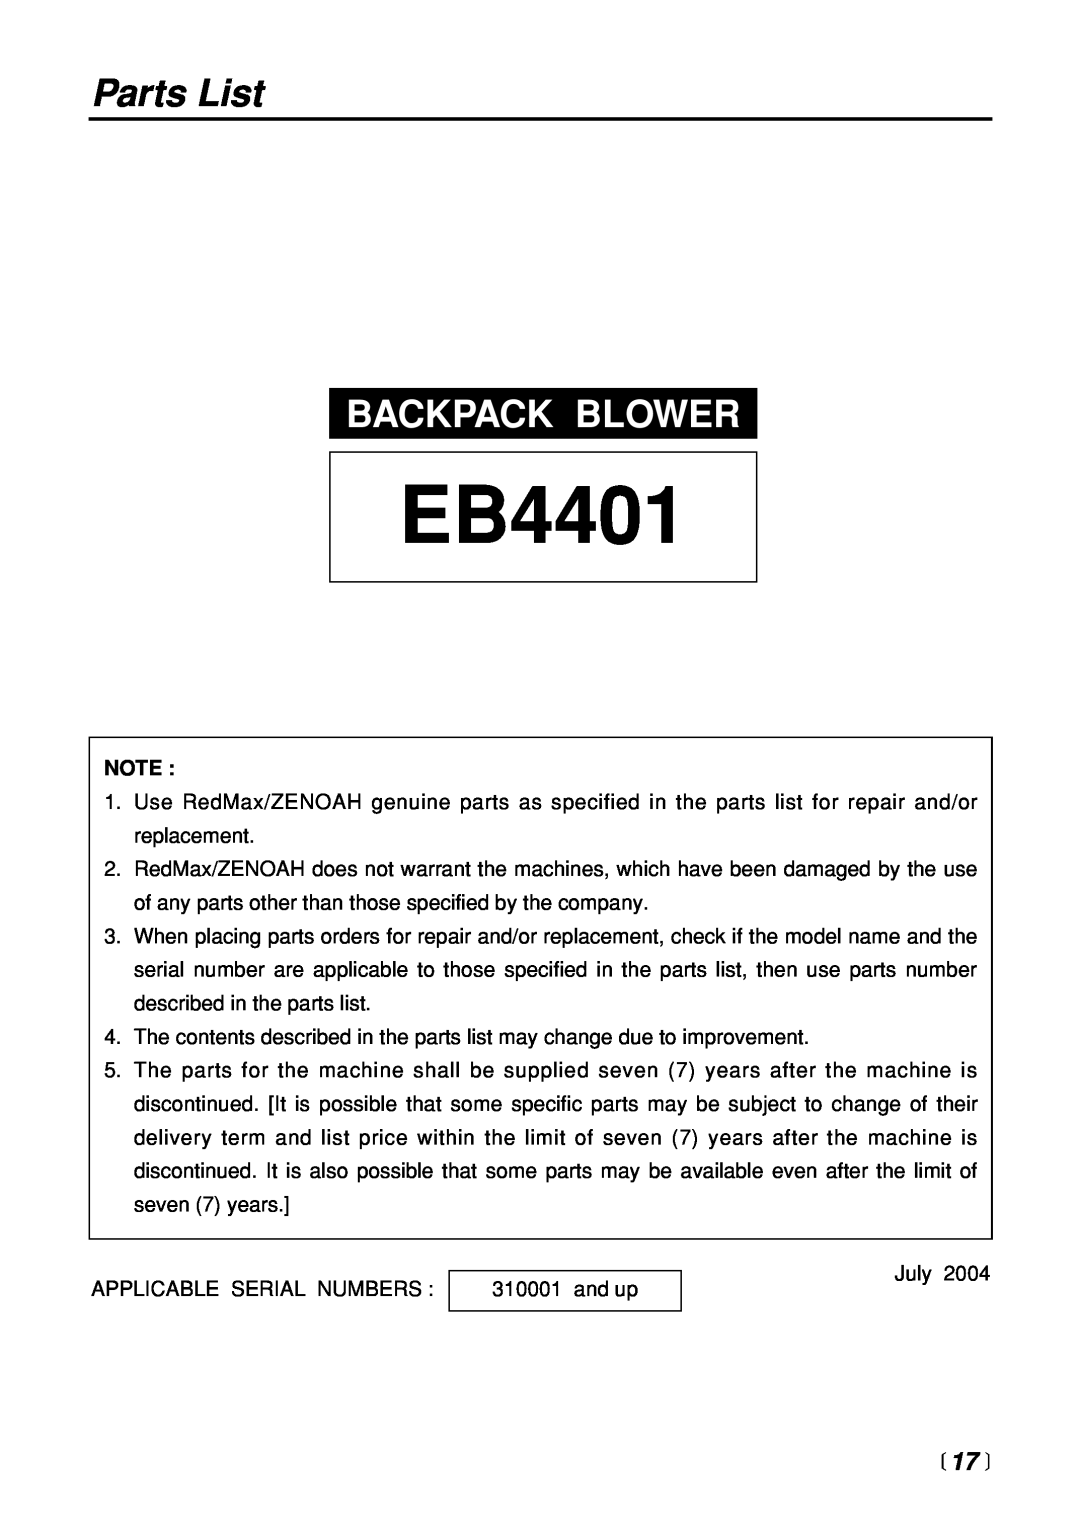 Zenoah EB4401 manual Parts List, Backpack Blower,  17  